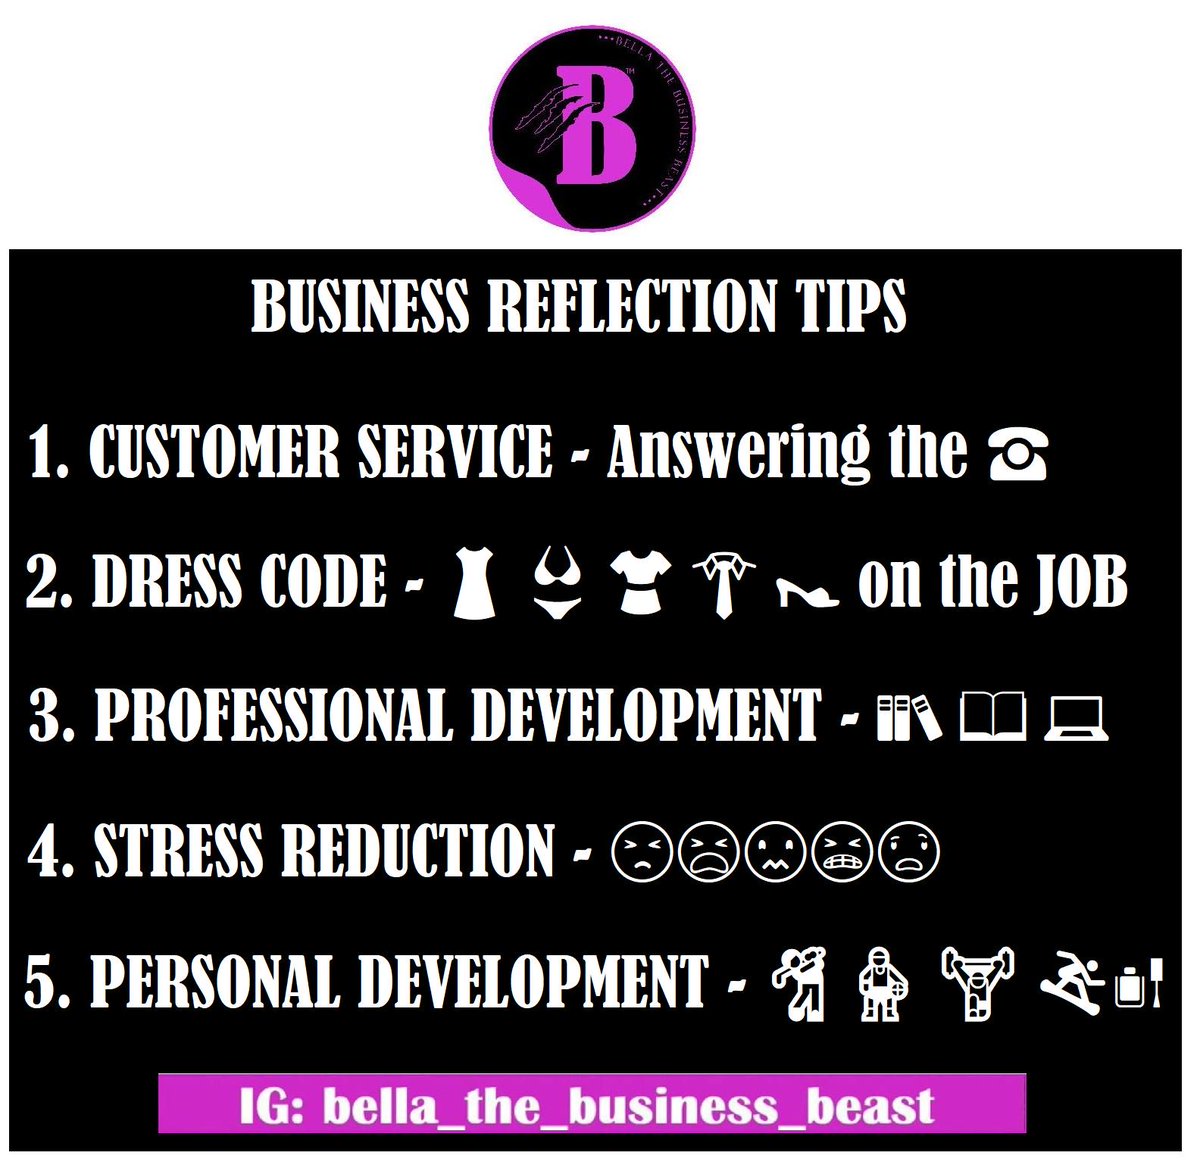 Reeeeeffflleeccctttiiooonnnn..... 

#reflectivepractice #businessreflections #bella_the_business_beast #selfdevelopment #dresscode #customerservice #antistress #coaching #management #selfreview #selfassessment #Hello #howcanwehelpyou #mirror #Tip #tips101 #professionaldevelopment